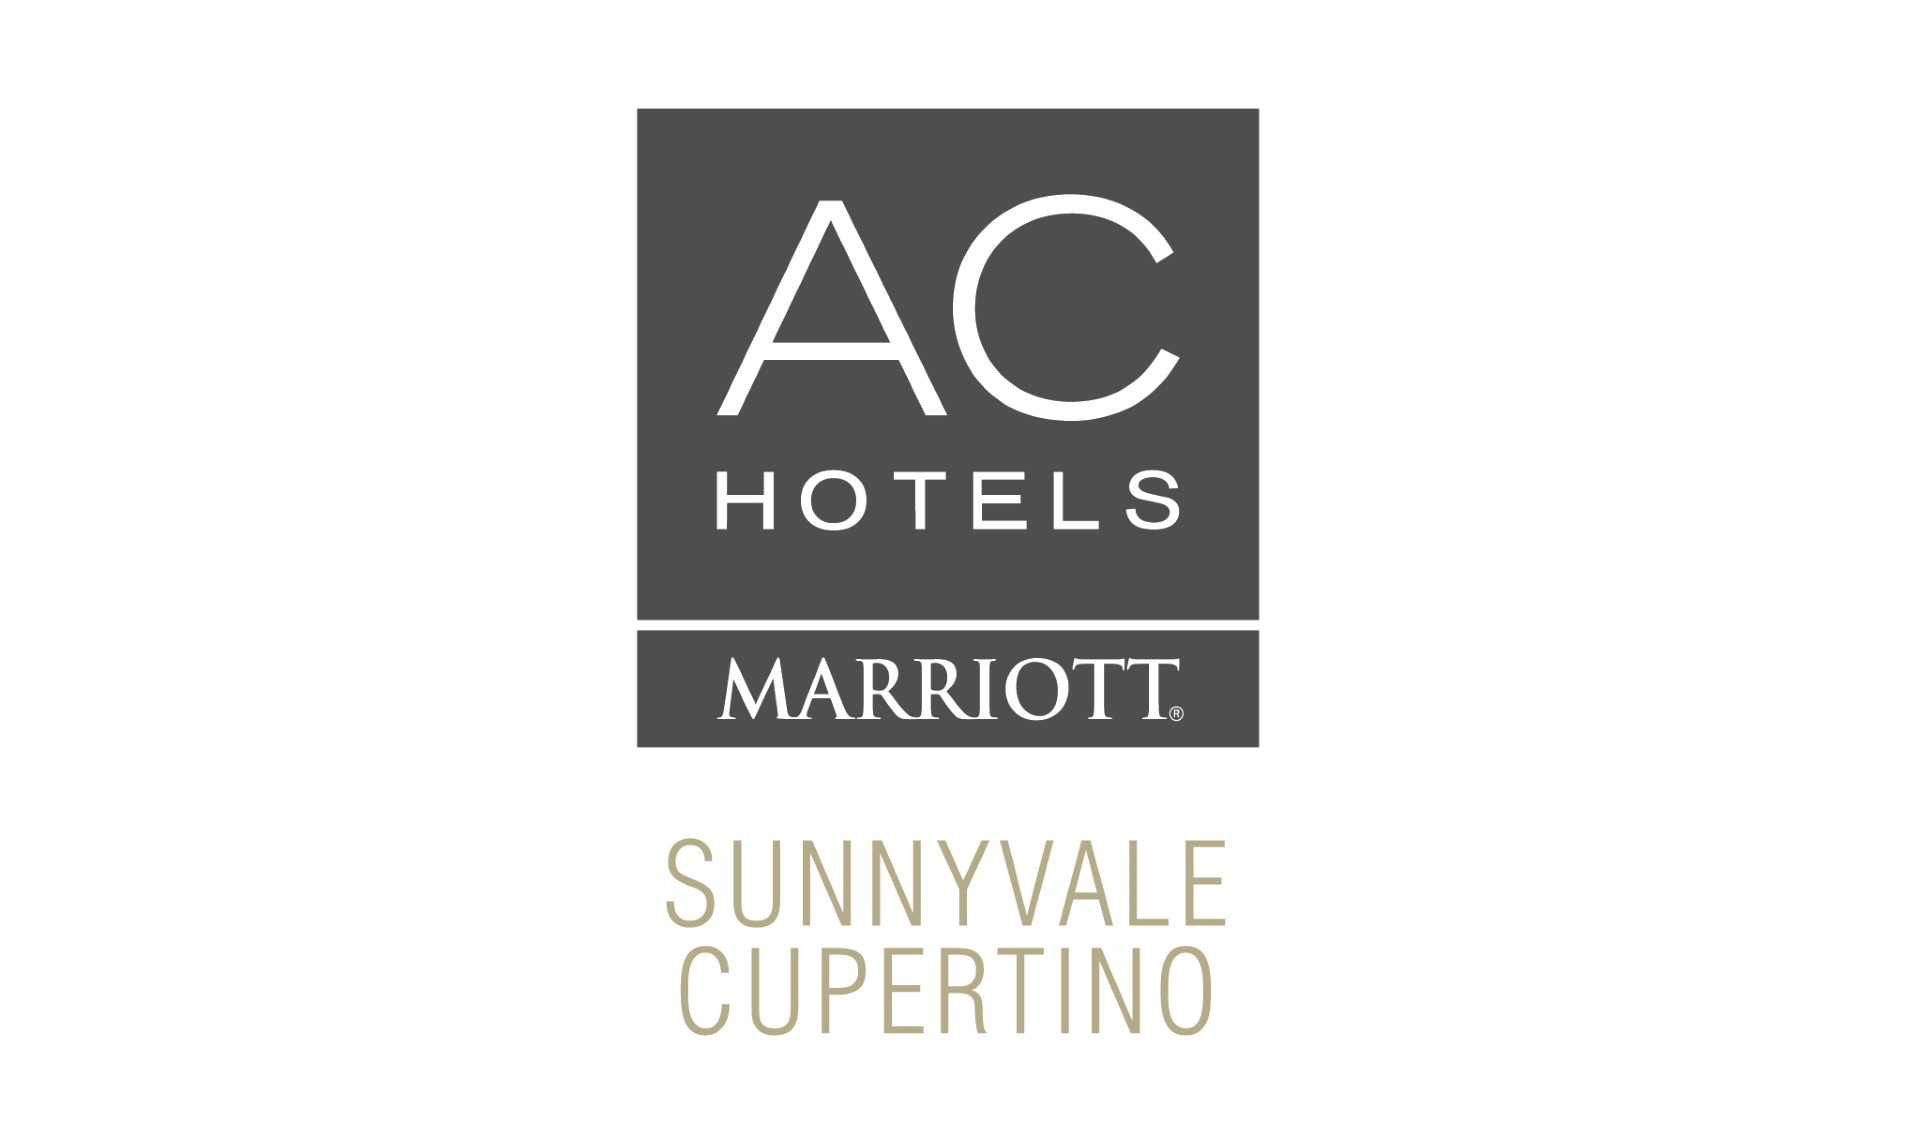 AC Hotels Marriott Sunnyvale Cupertino